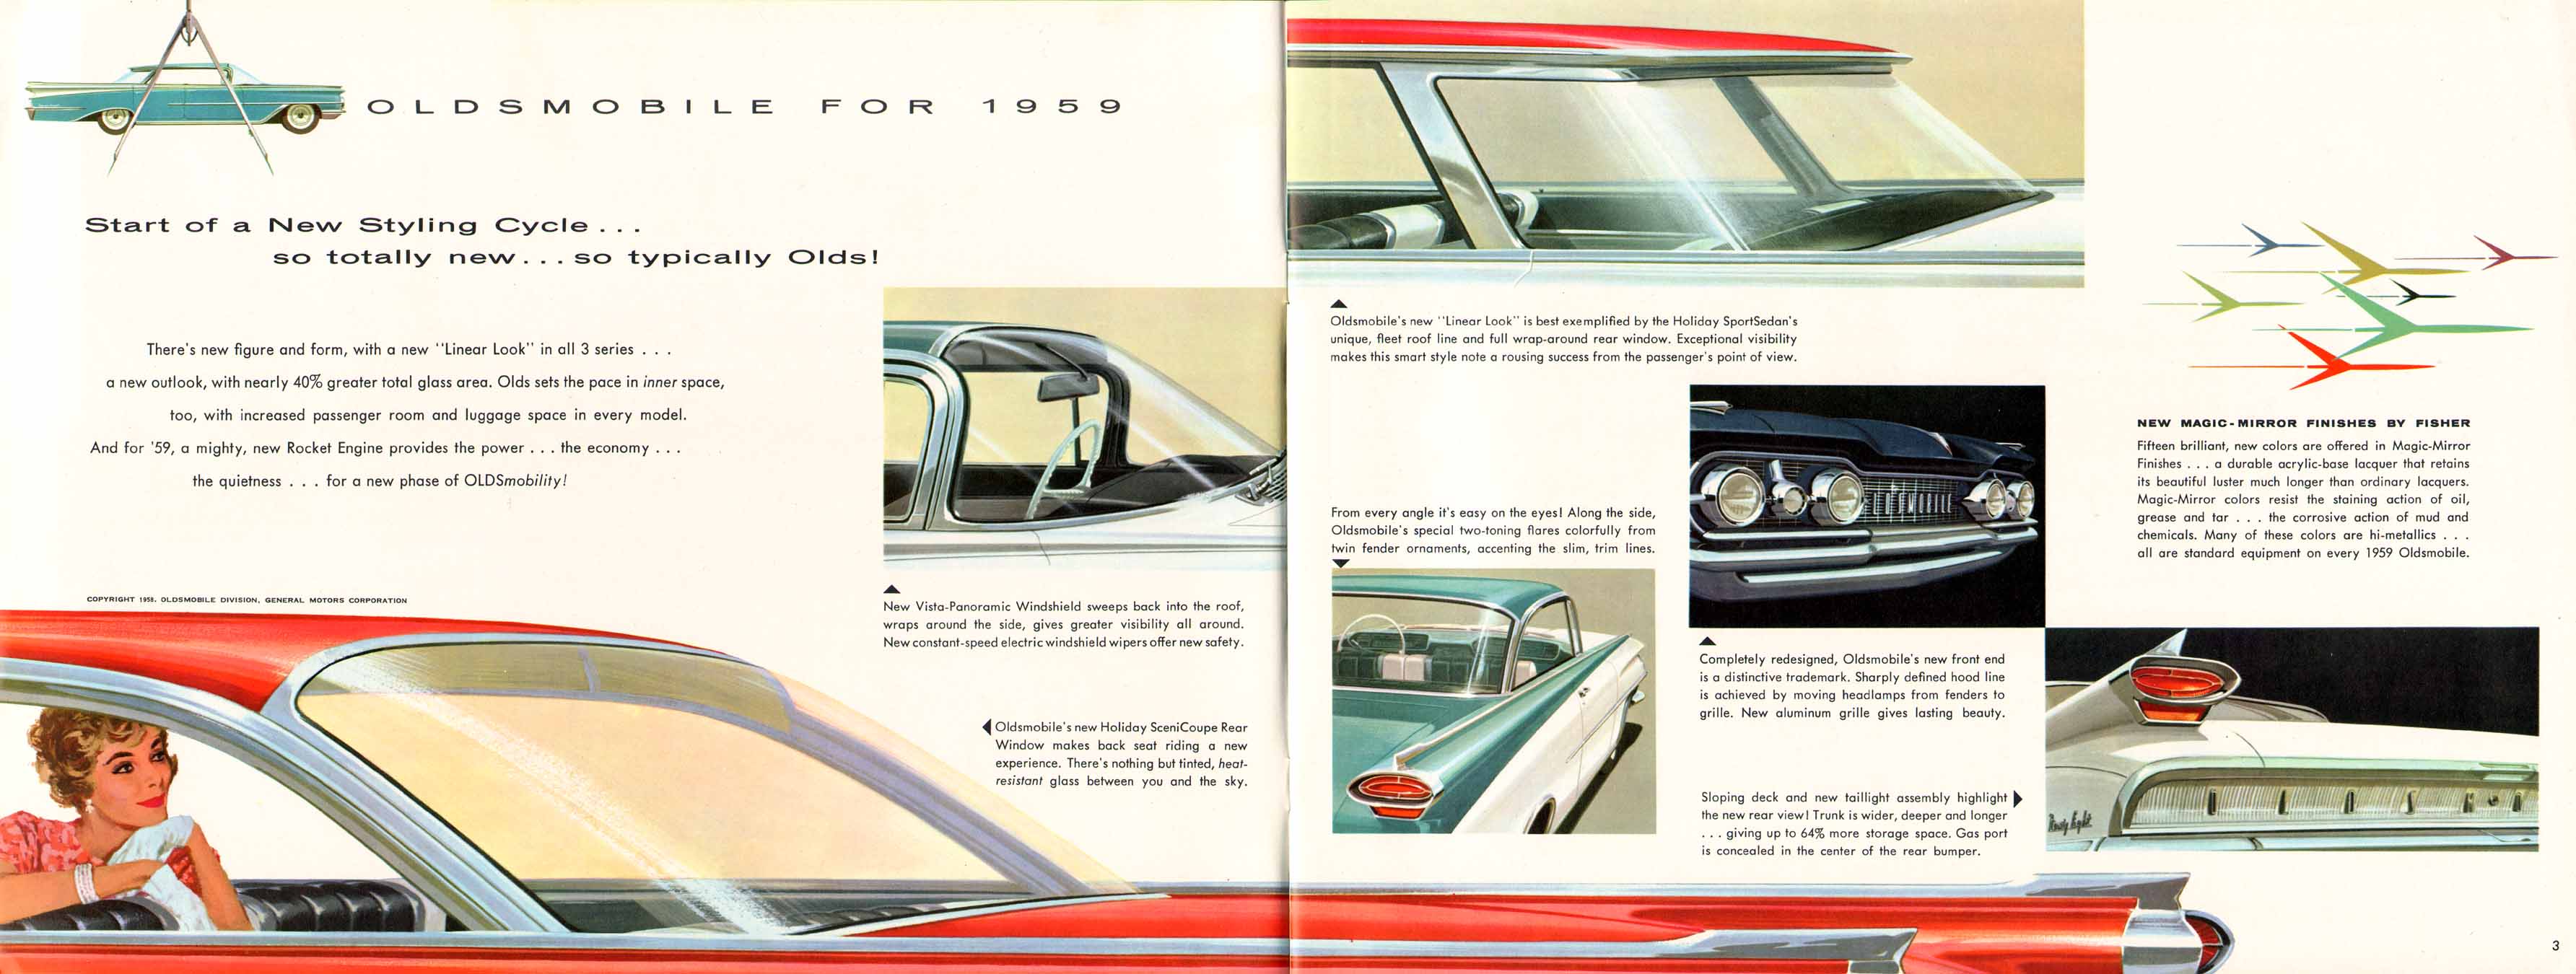 1959 Oldsmobile Motor Cars Brochure Page 4